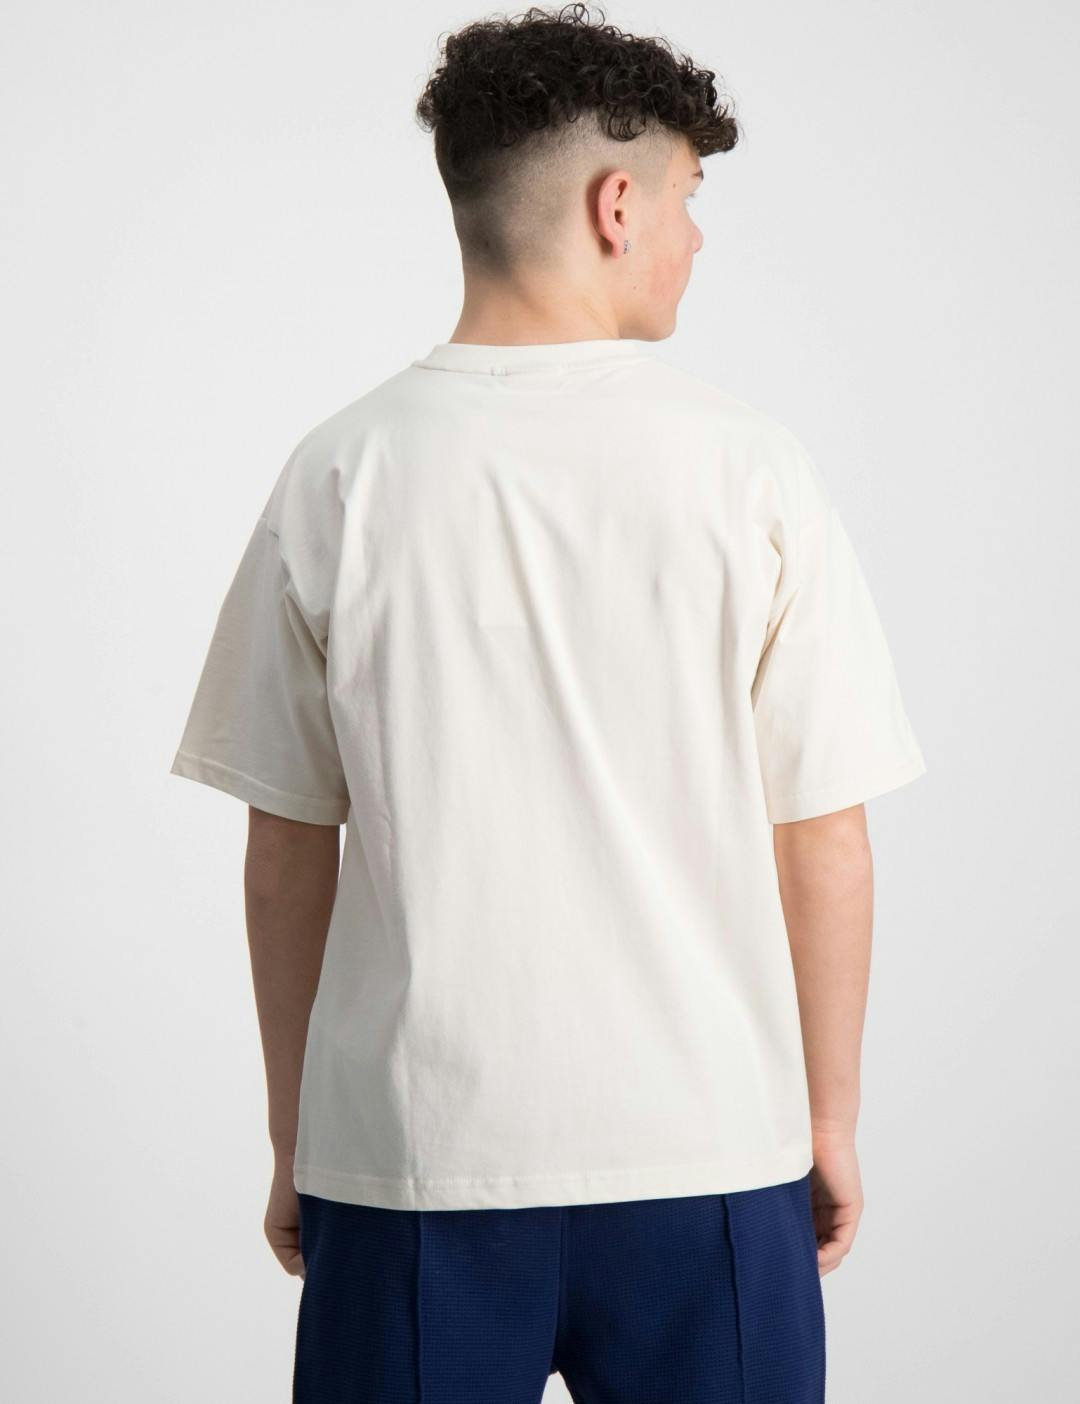 TOUTENDORF oversized t-shirt